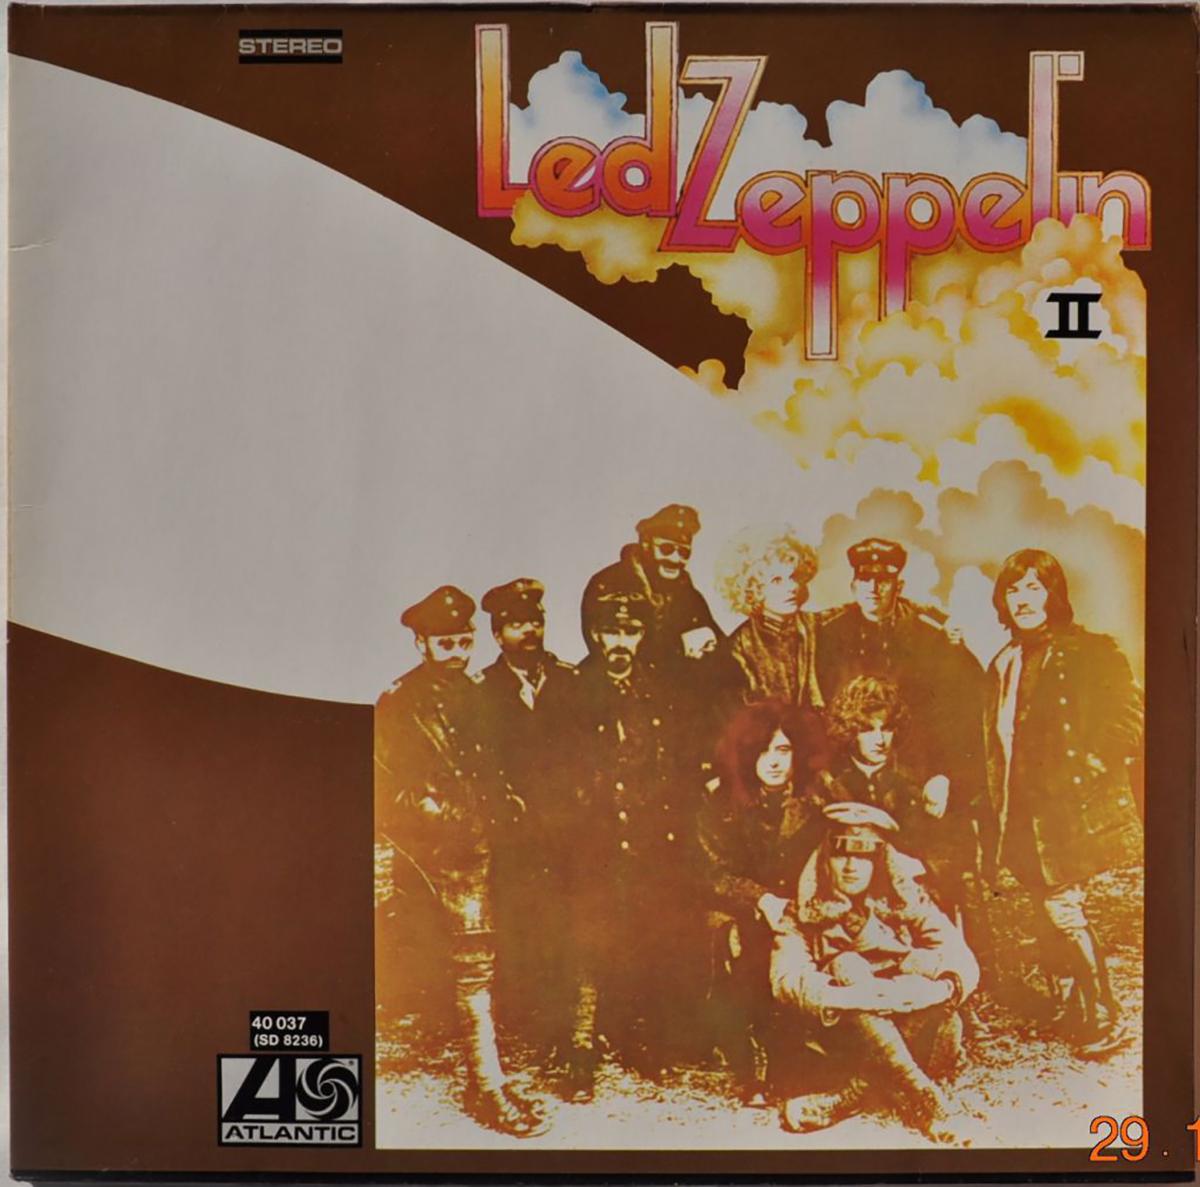 Led Zeppelin II second studio album cover